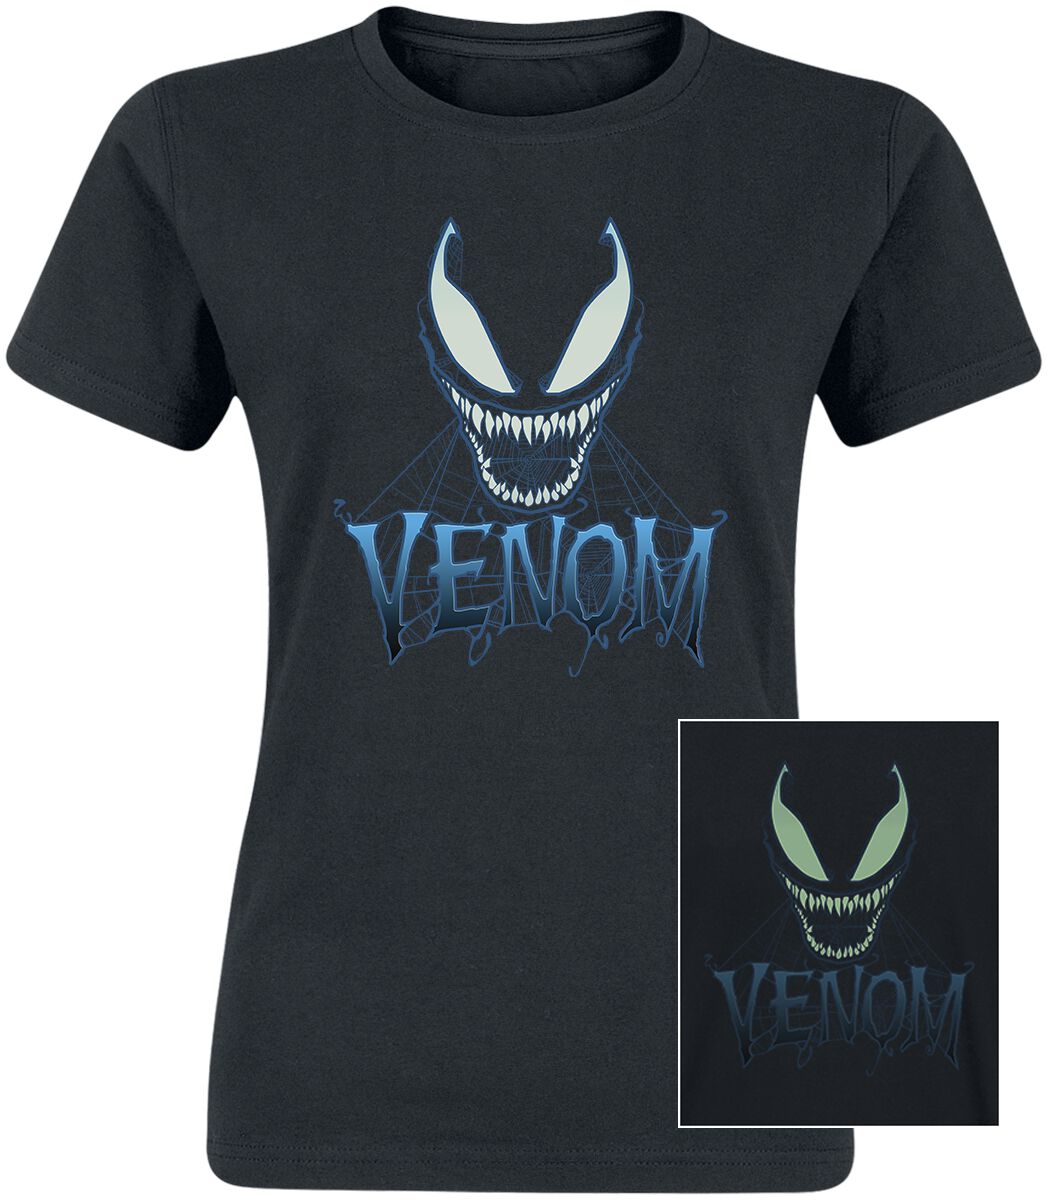 Image of T-Shirt di Venom (Marvel) - Blue web face - Glow in the dark - S a XXL - Donna - nero